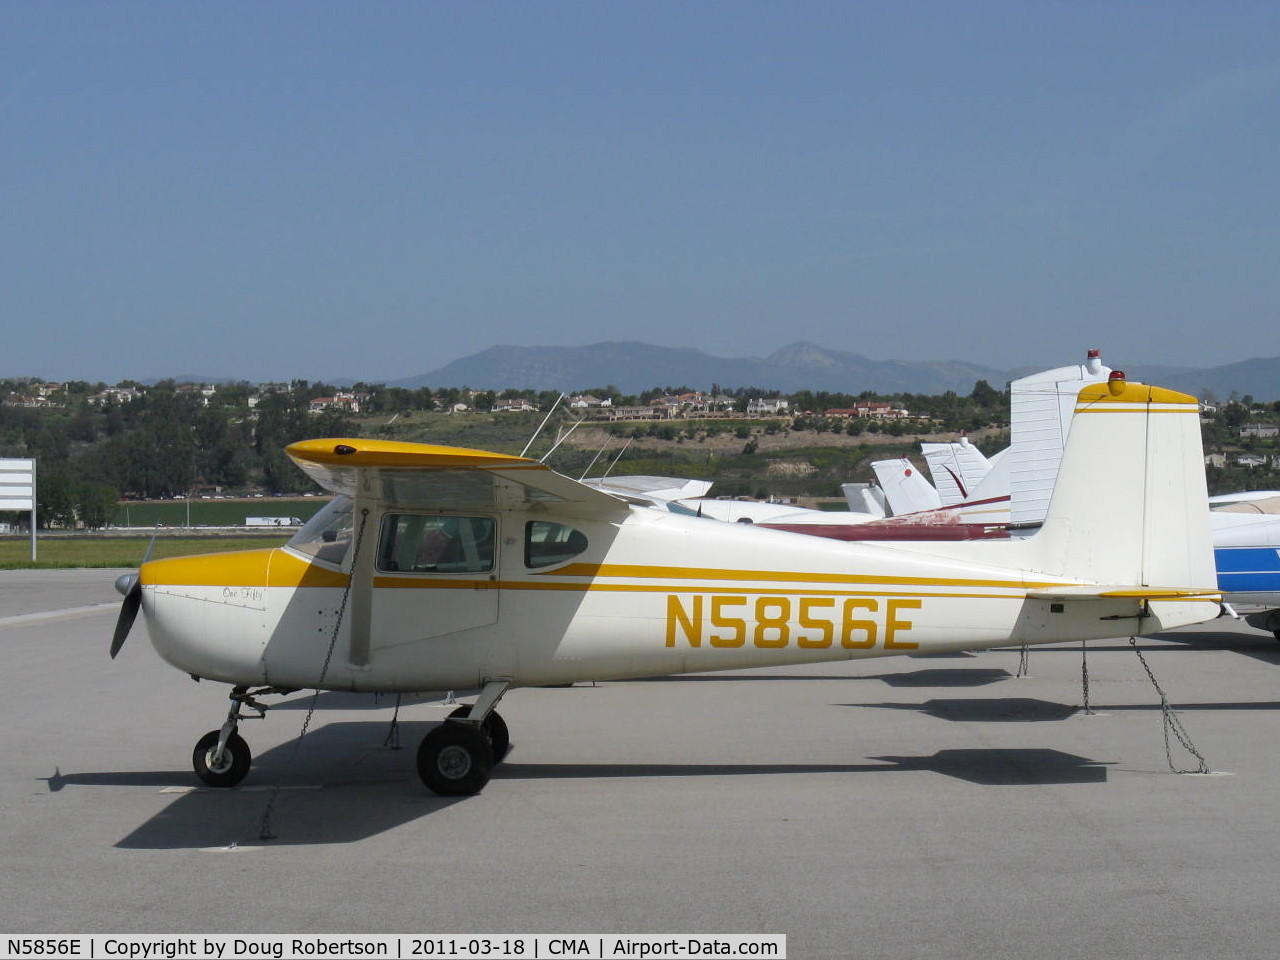 N5856E, 1959 Cessna 150 C/N 17356, 1959 Cessna 150, Continental O-200 100 Hp